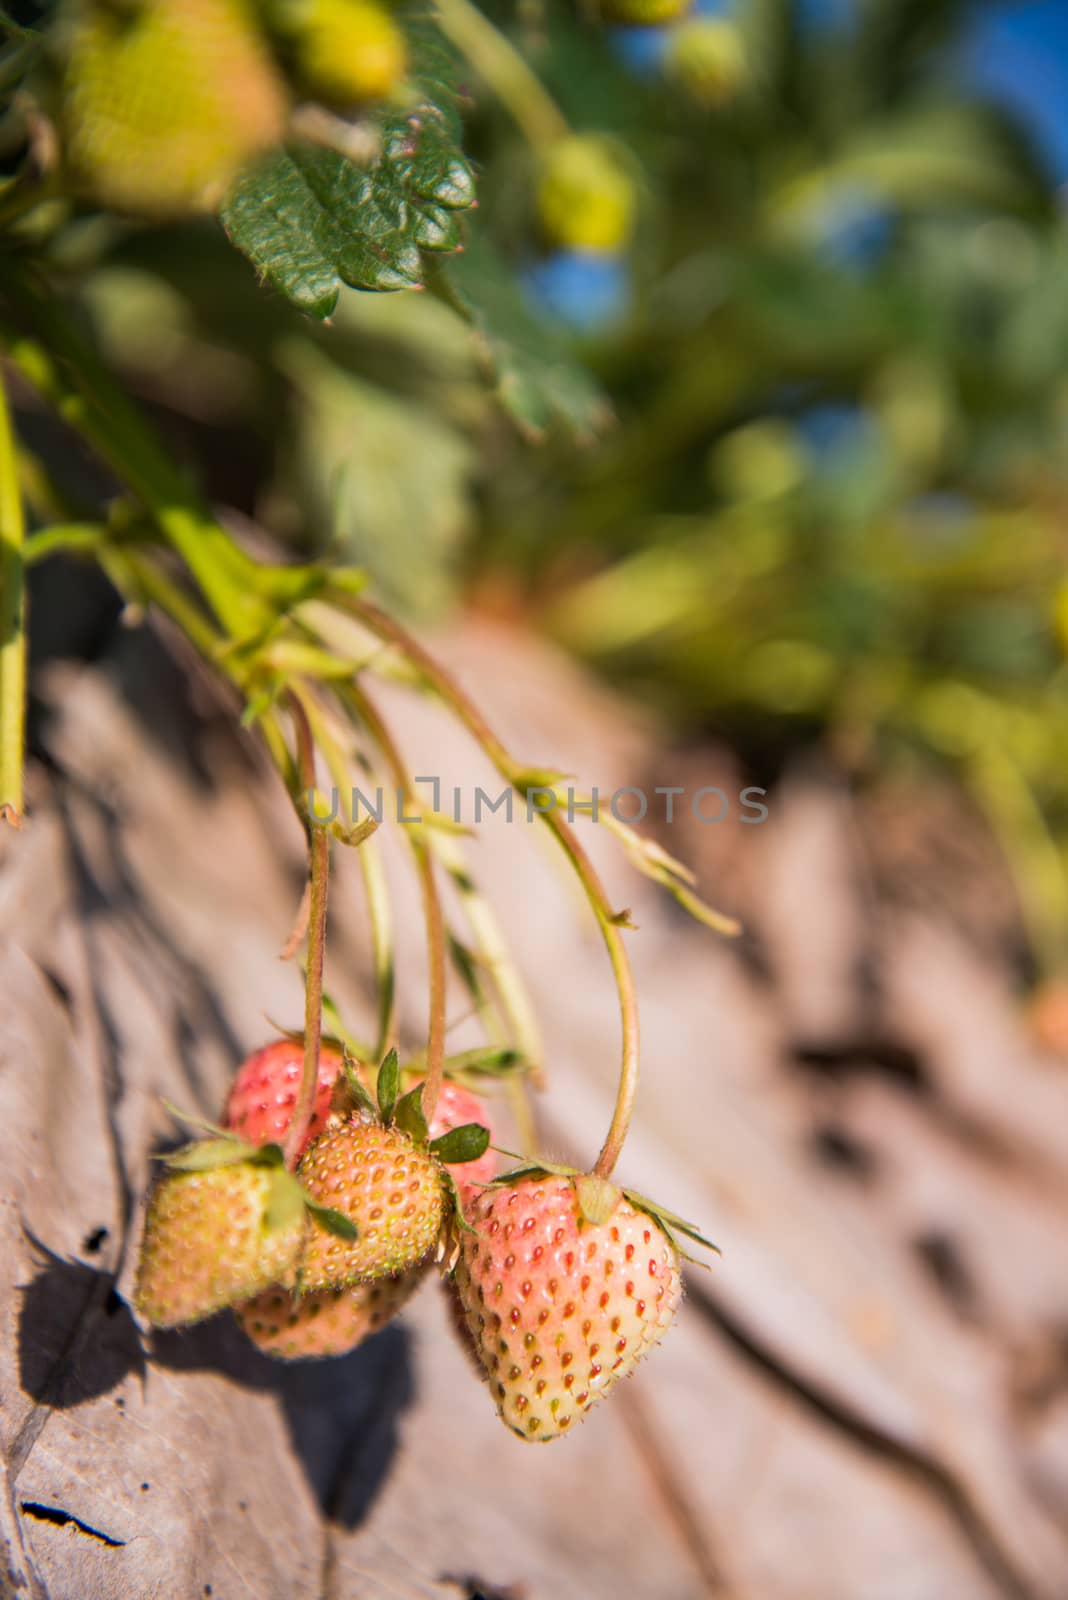 strawberry garden at doi angkhang mountain, chiangmai : thailand by jakgree